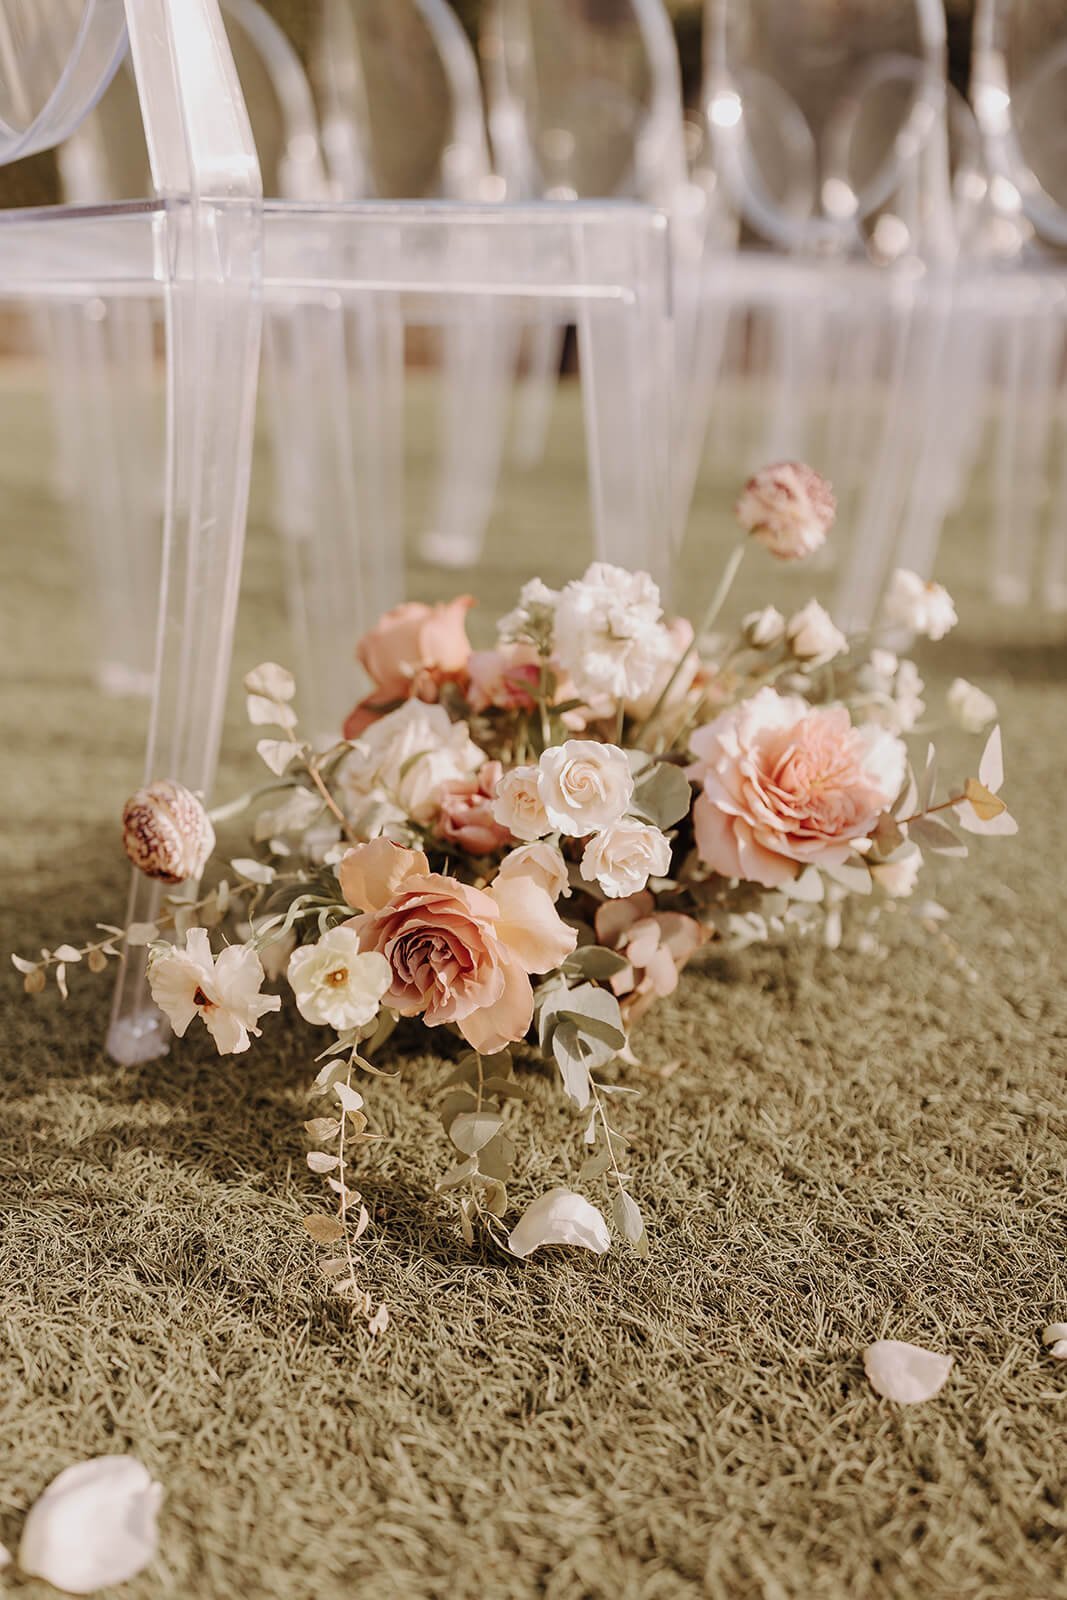 Floral arrangement lining ceremony aisle outdoors at luxury Scottsdale wedding